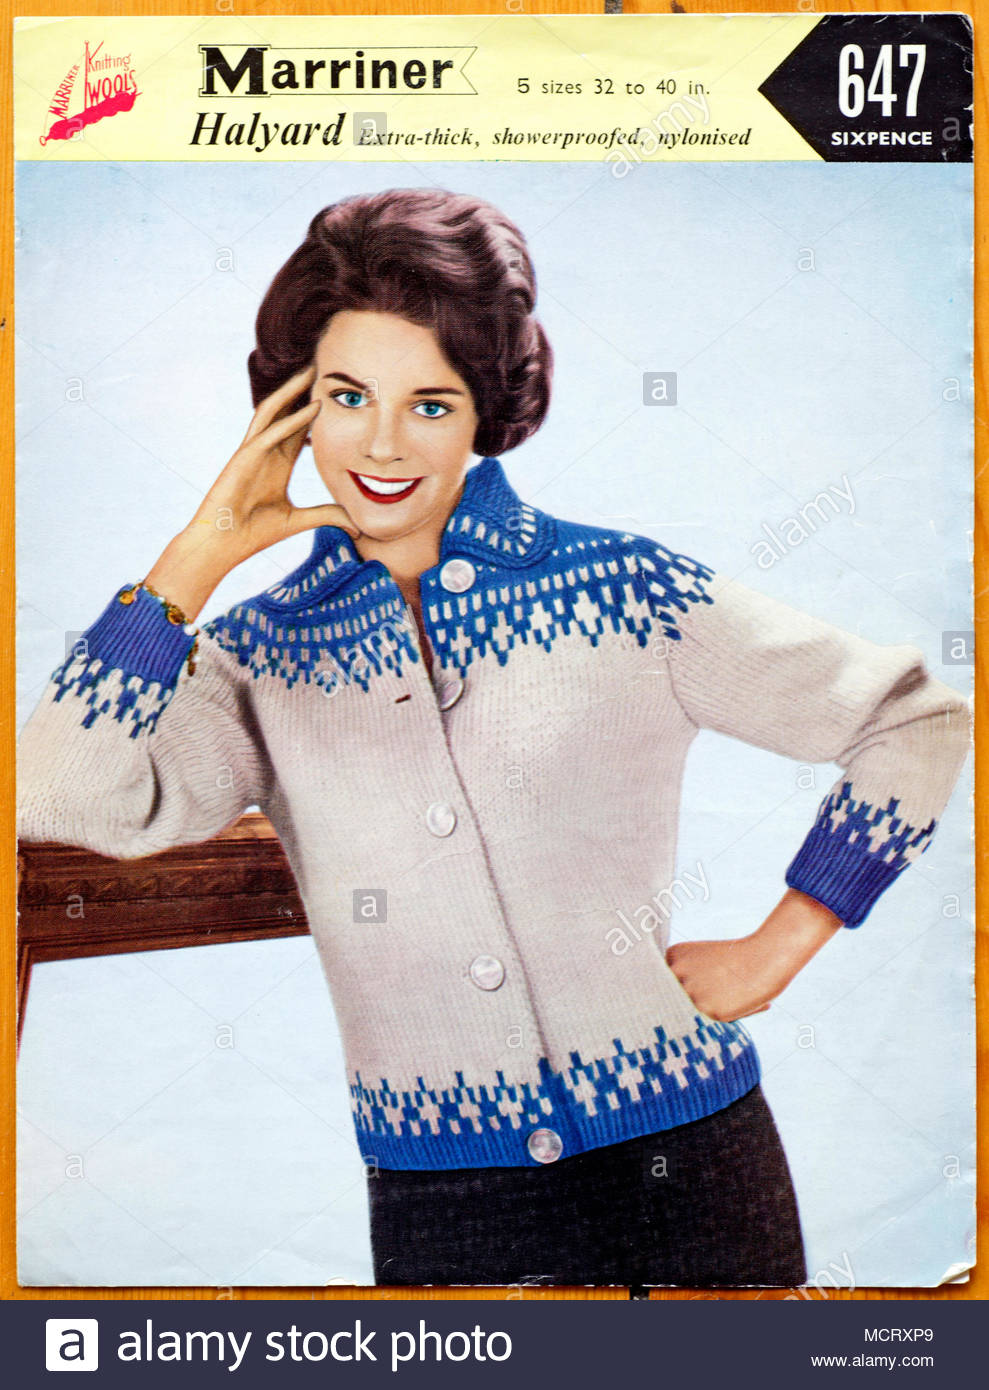 Marriner Knitting pattern 1960s Stock Photo